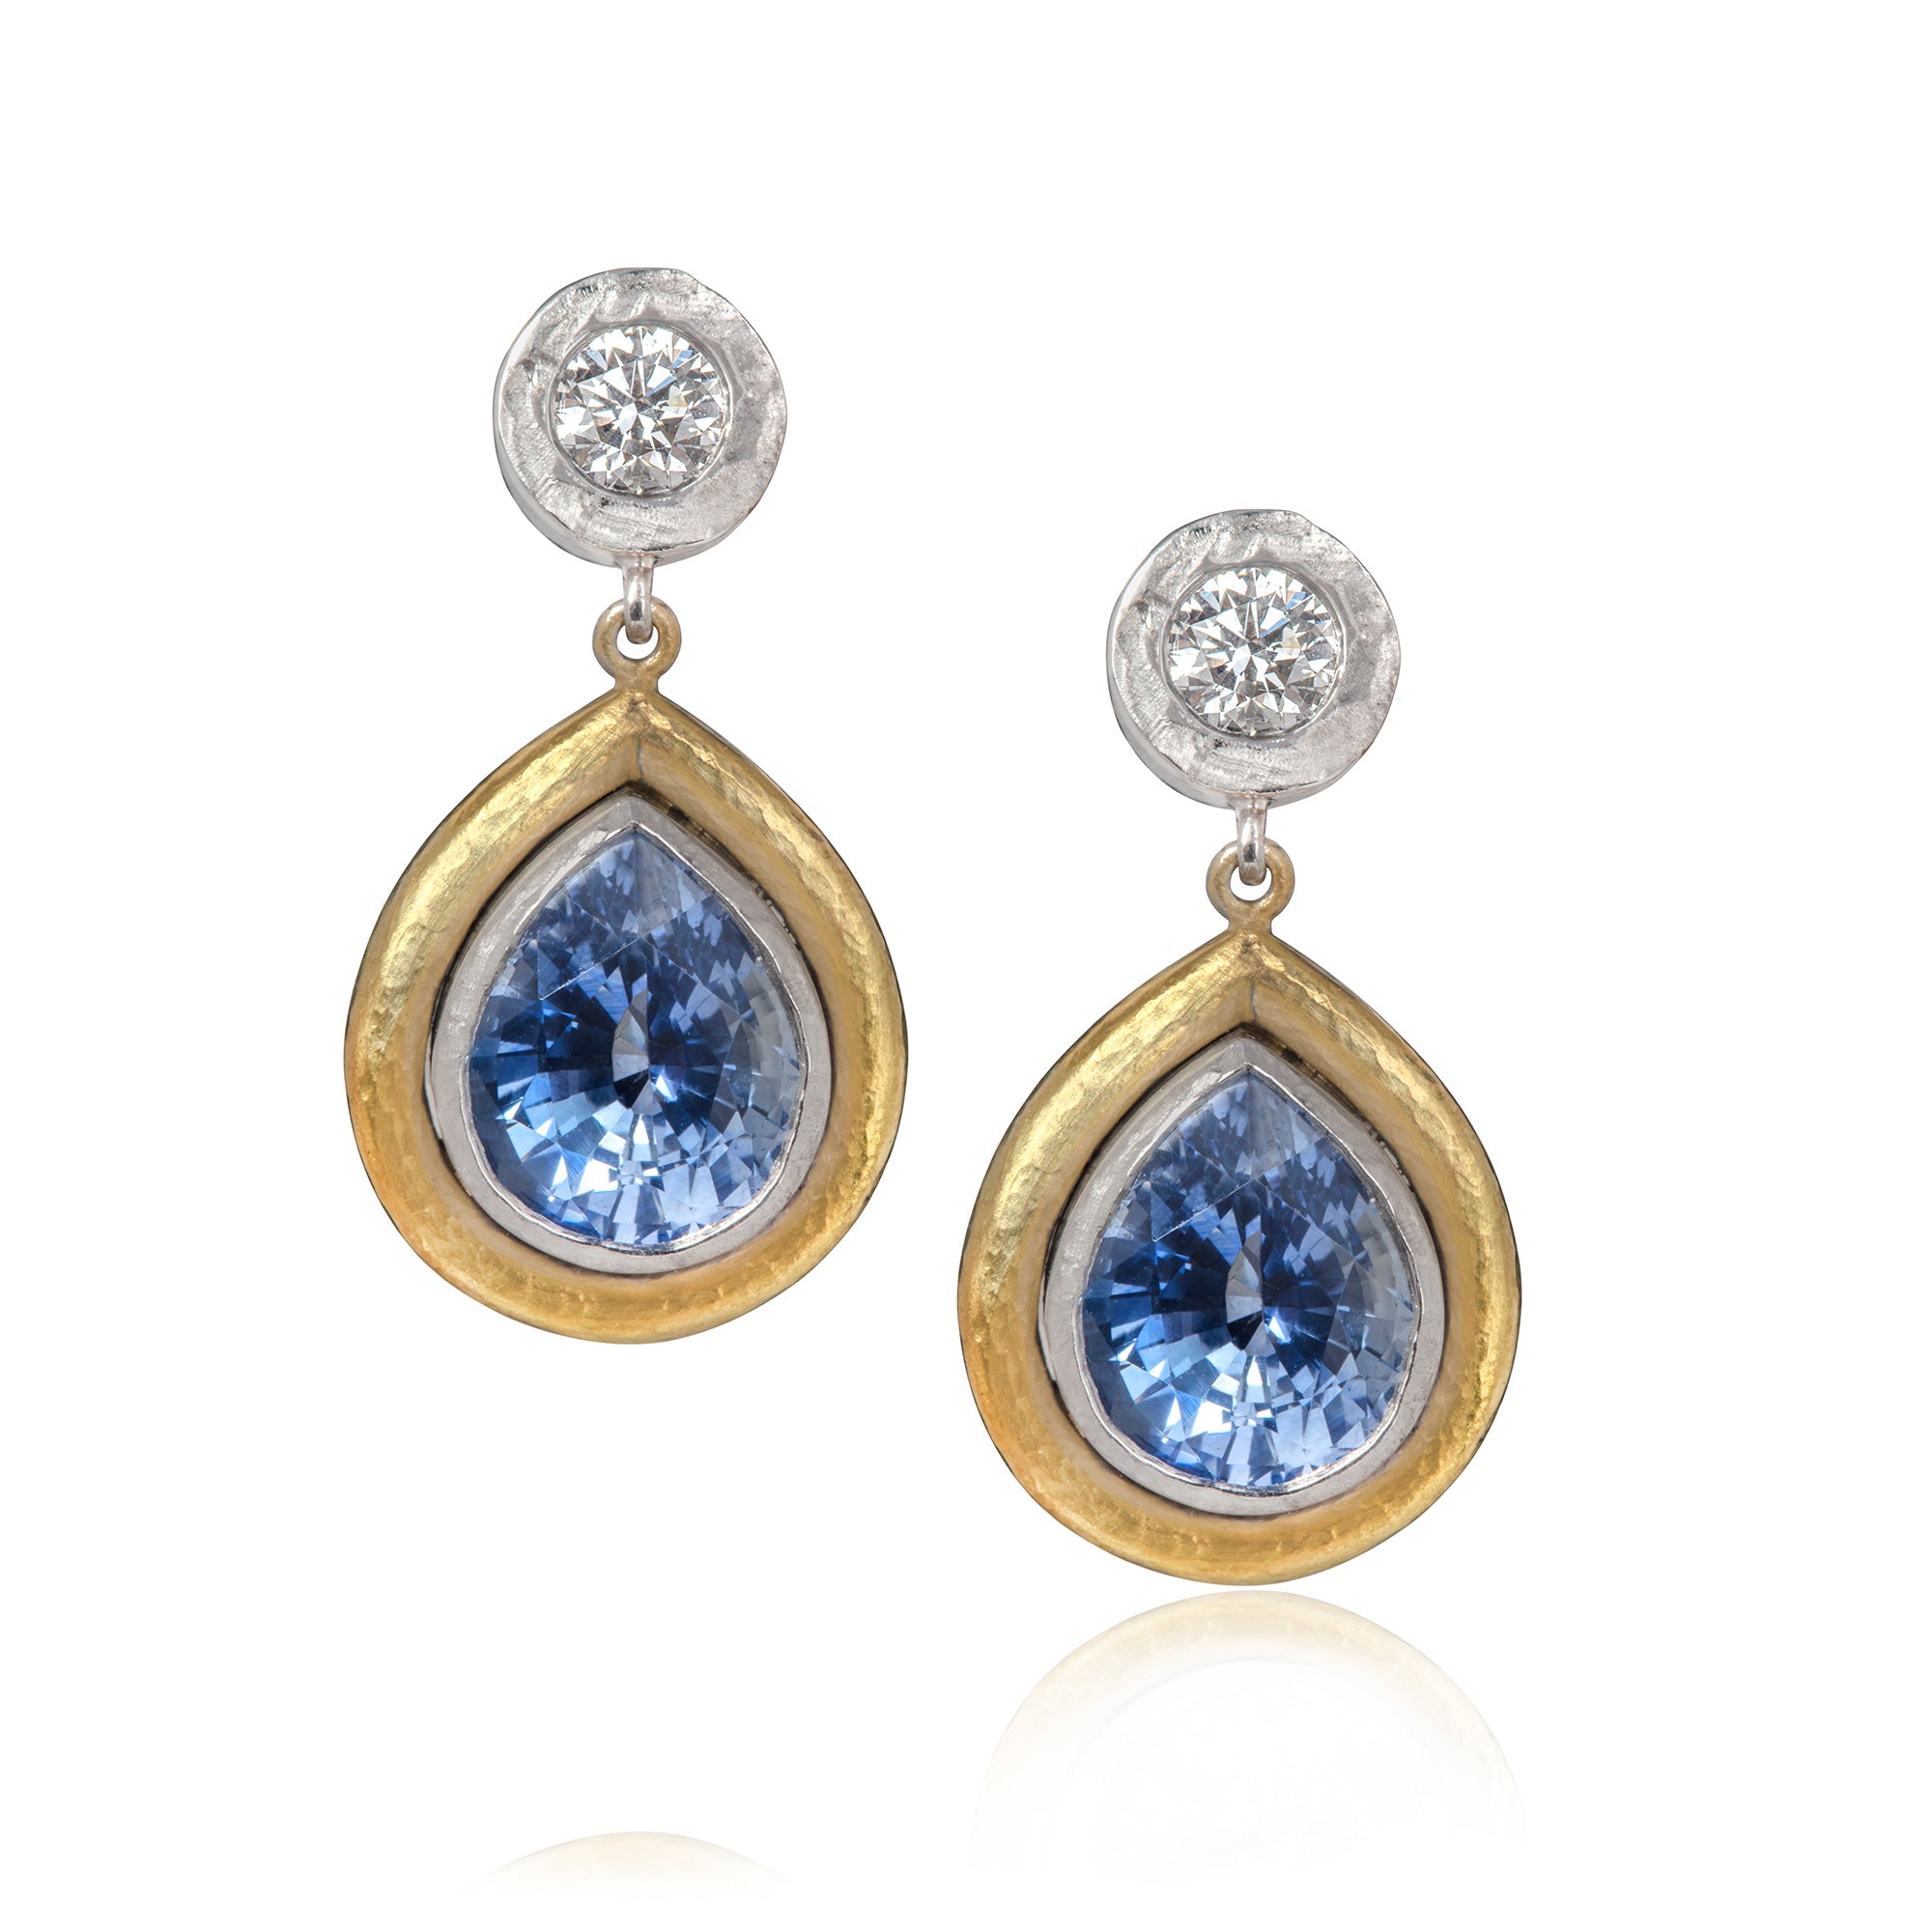 Diamond and Sapphire Drop Earrings